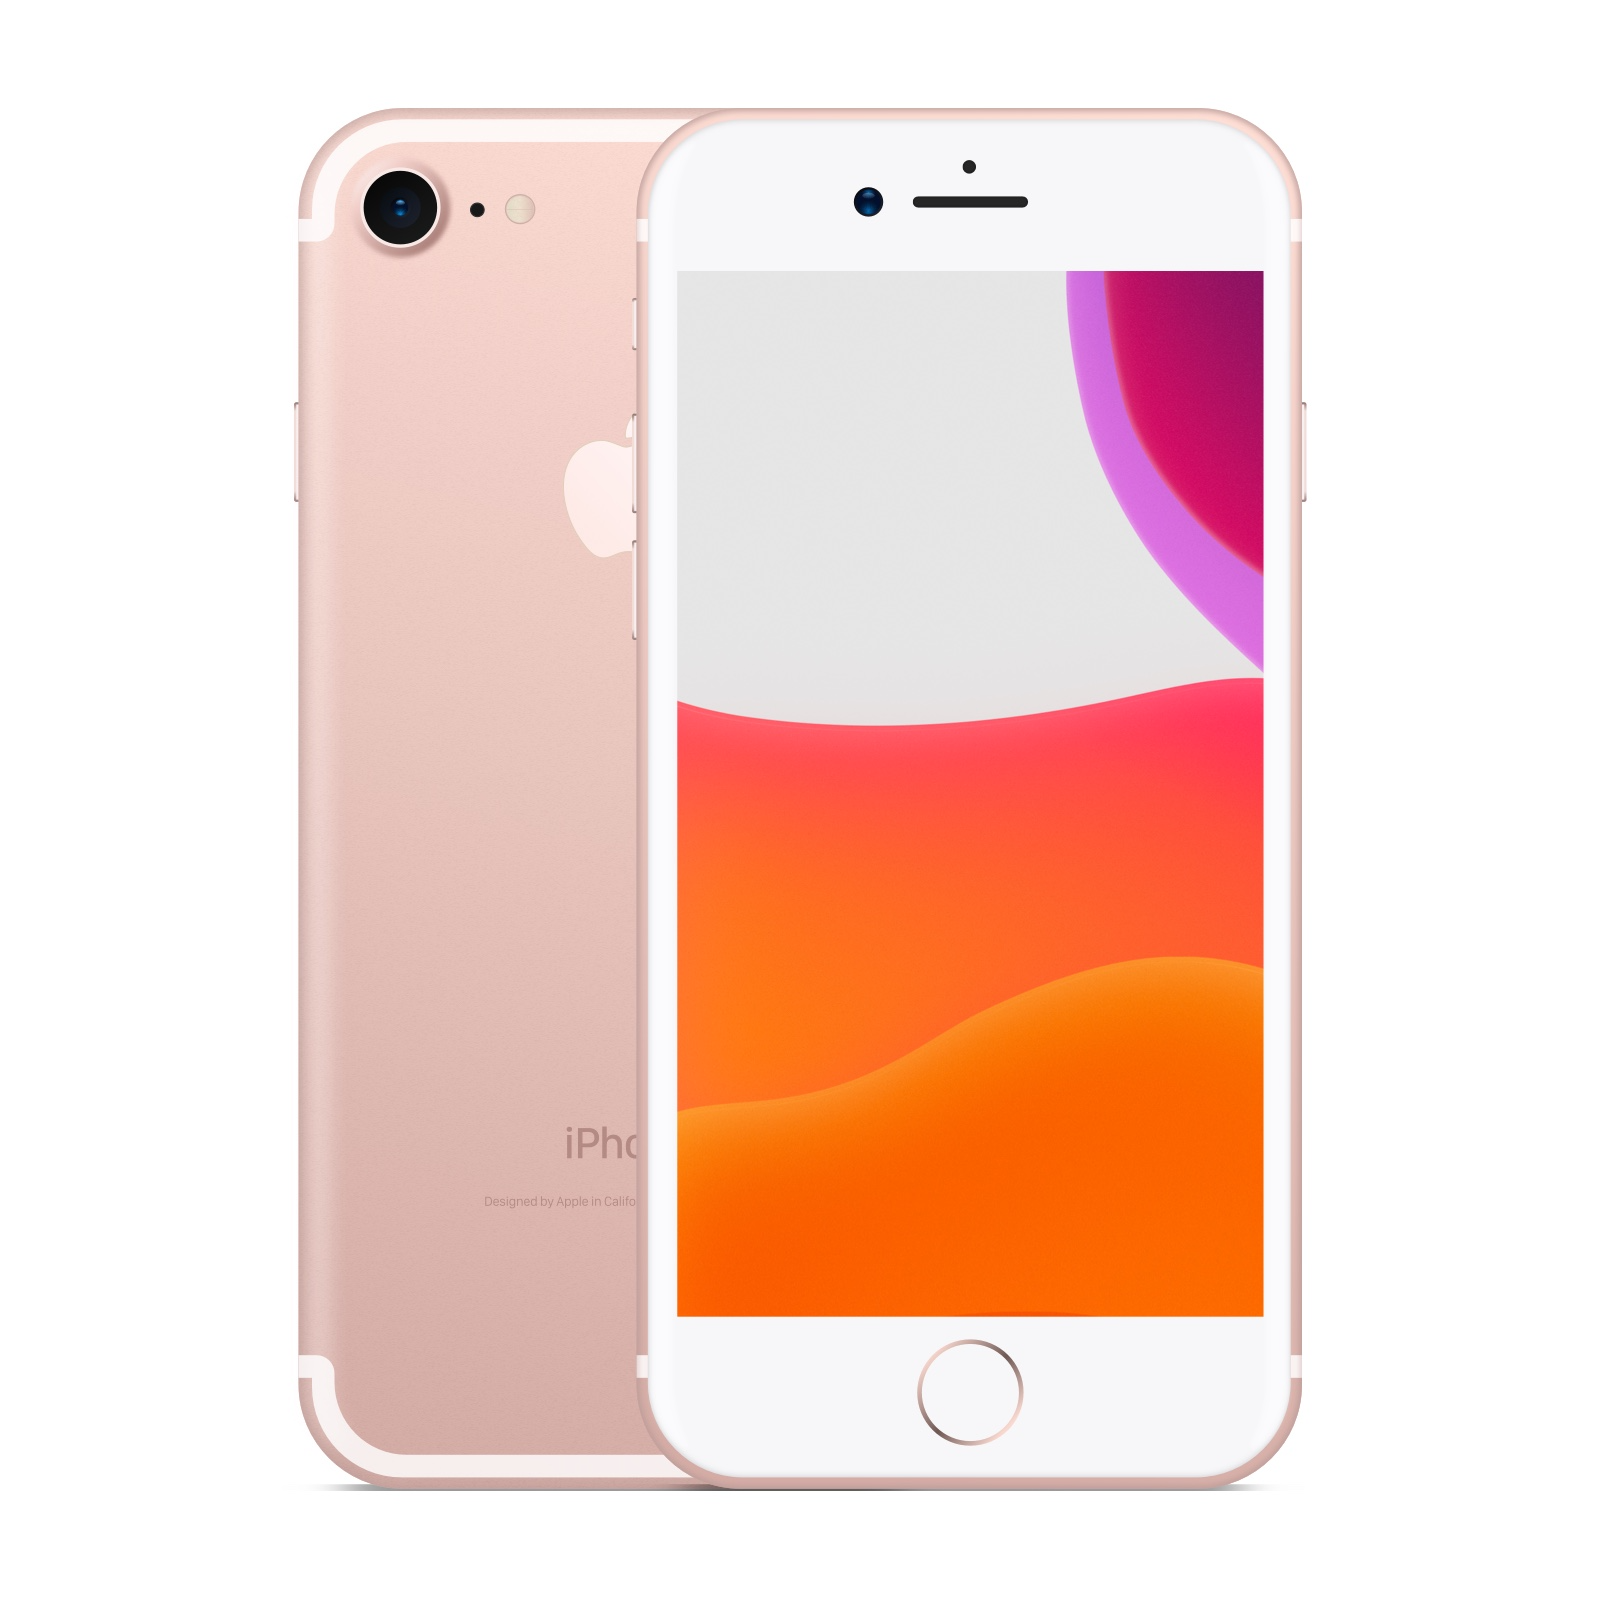 Apple iPhone 7, 32GB, Rose Gold, Unlocked - Refurbished Good